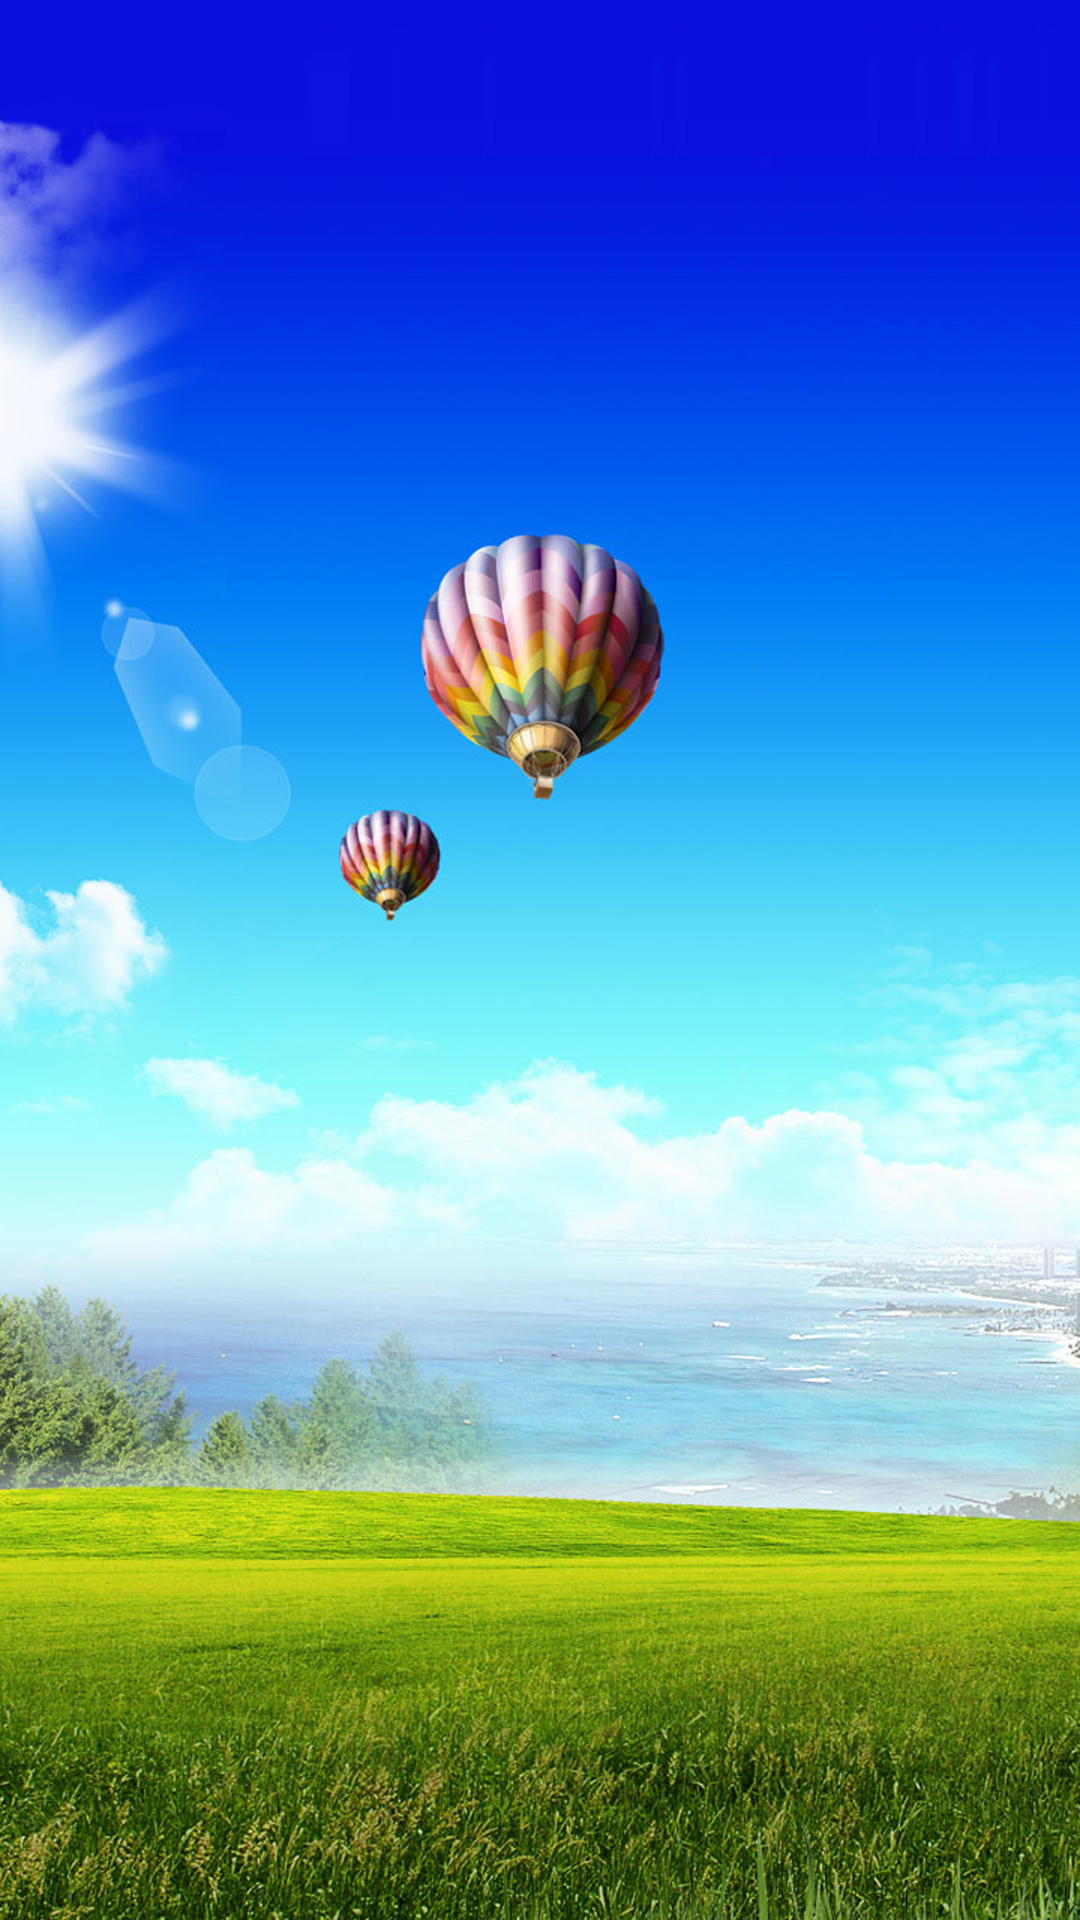 samsung s4 live wallpaper,heißluftballon fahren,heißluftballon,himmel,natur,tagsüber